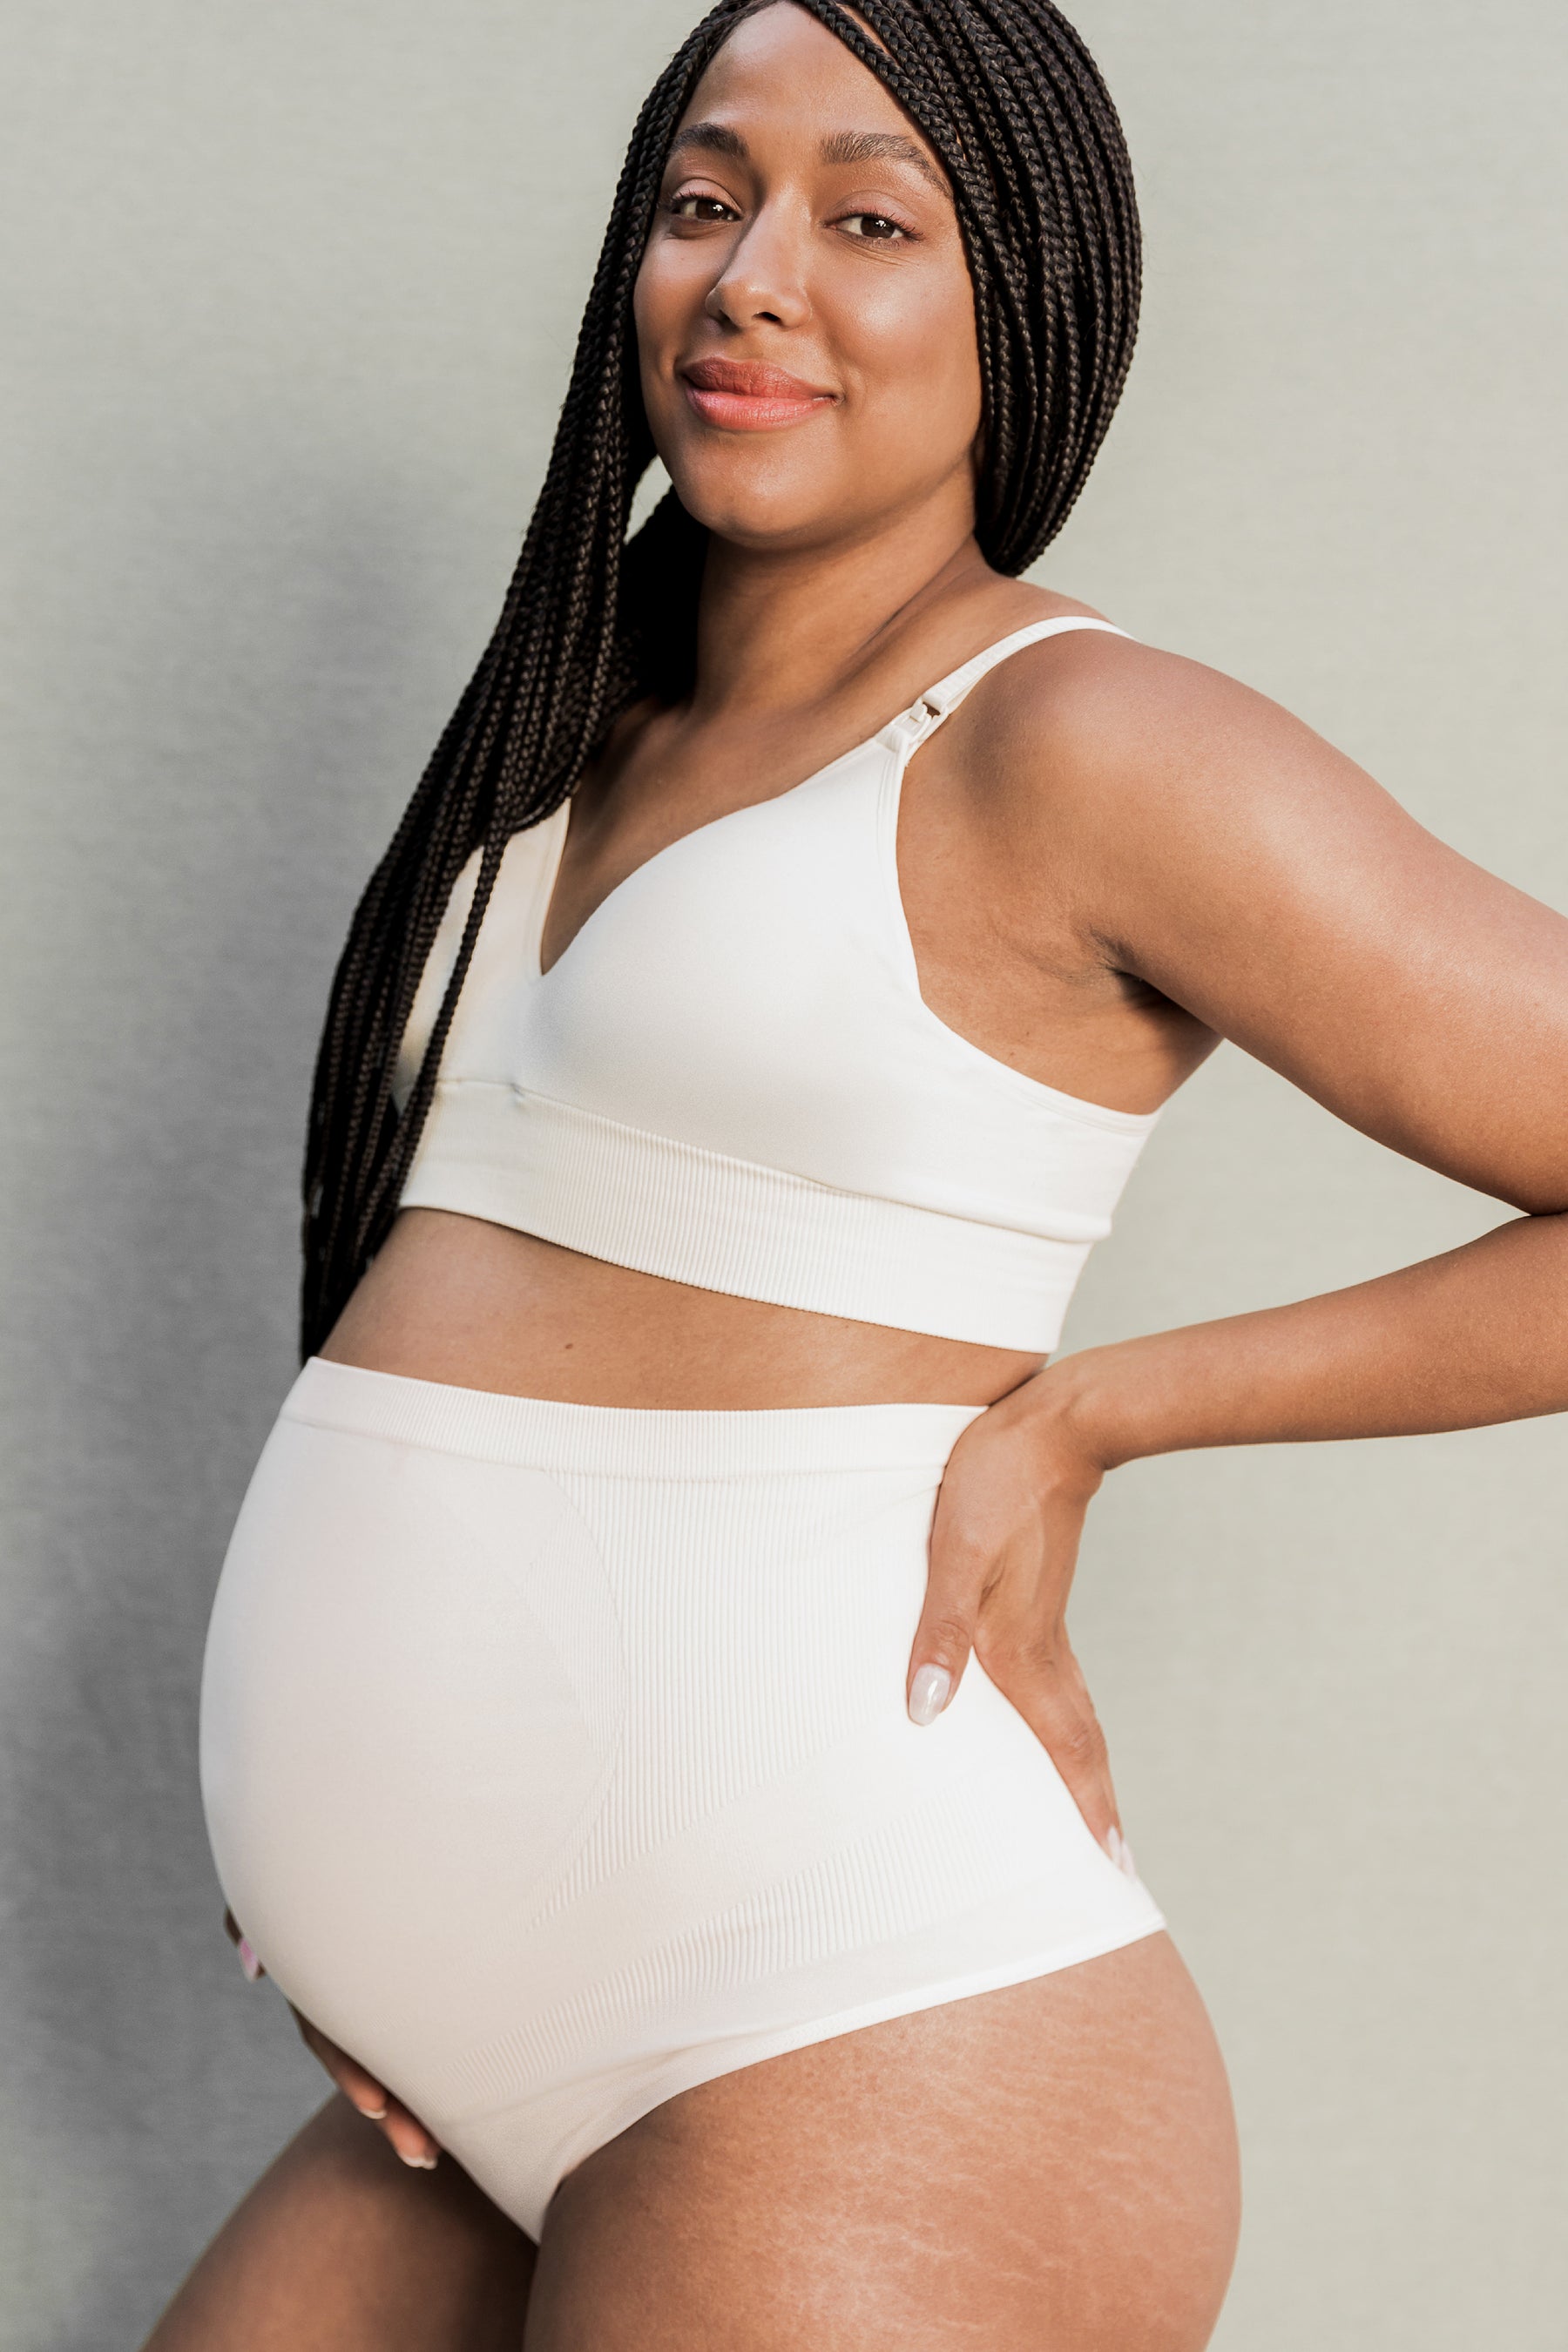 ZTOV™ Pregnancy Maternity Panties